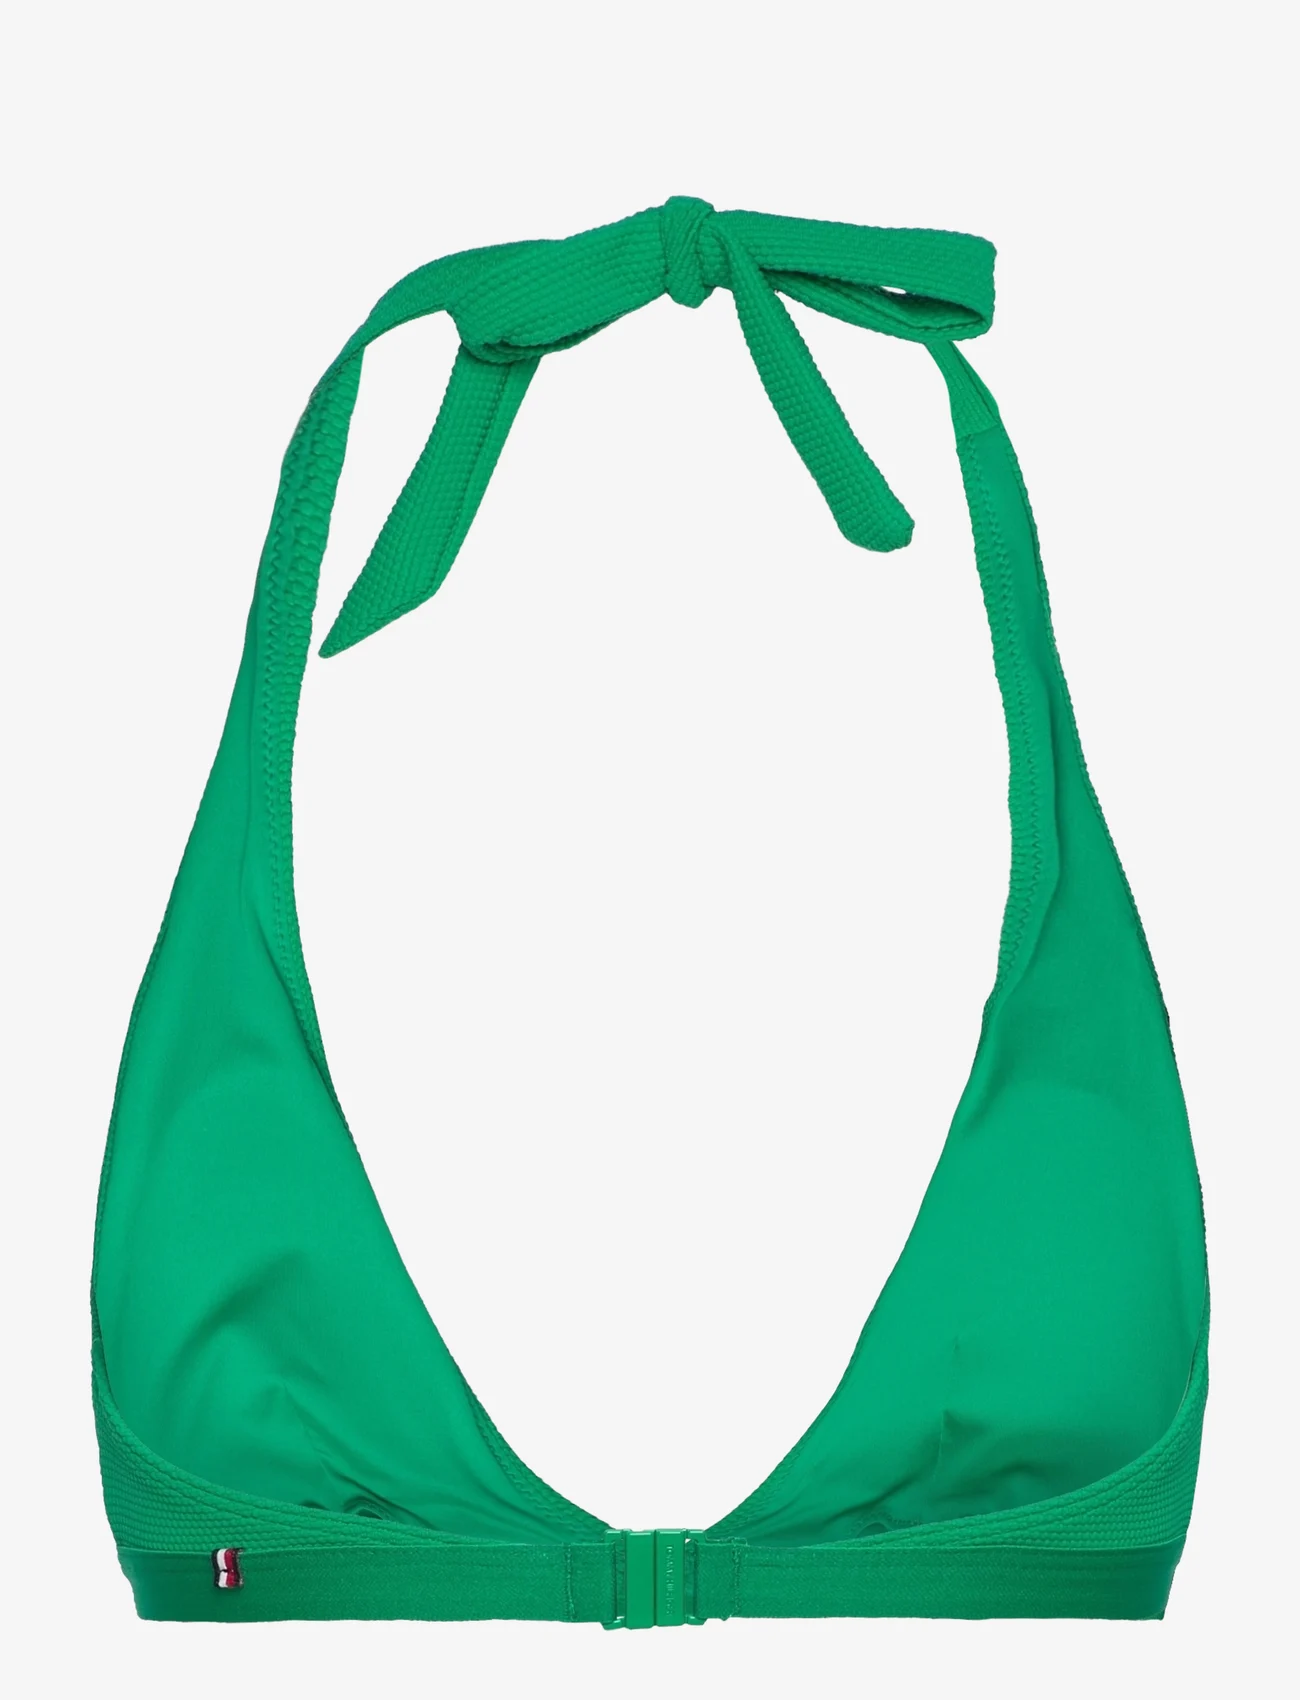 Tommy Hilfiger - TRIANGLE FIXED RP - triangle bikini - olympic green - 1